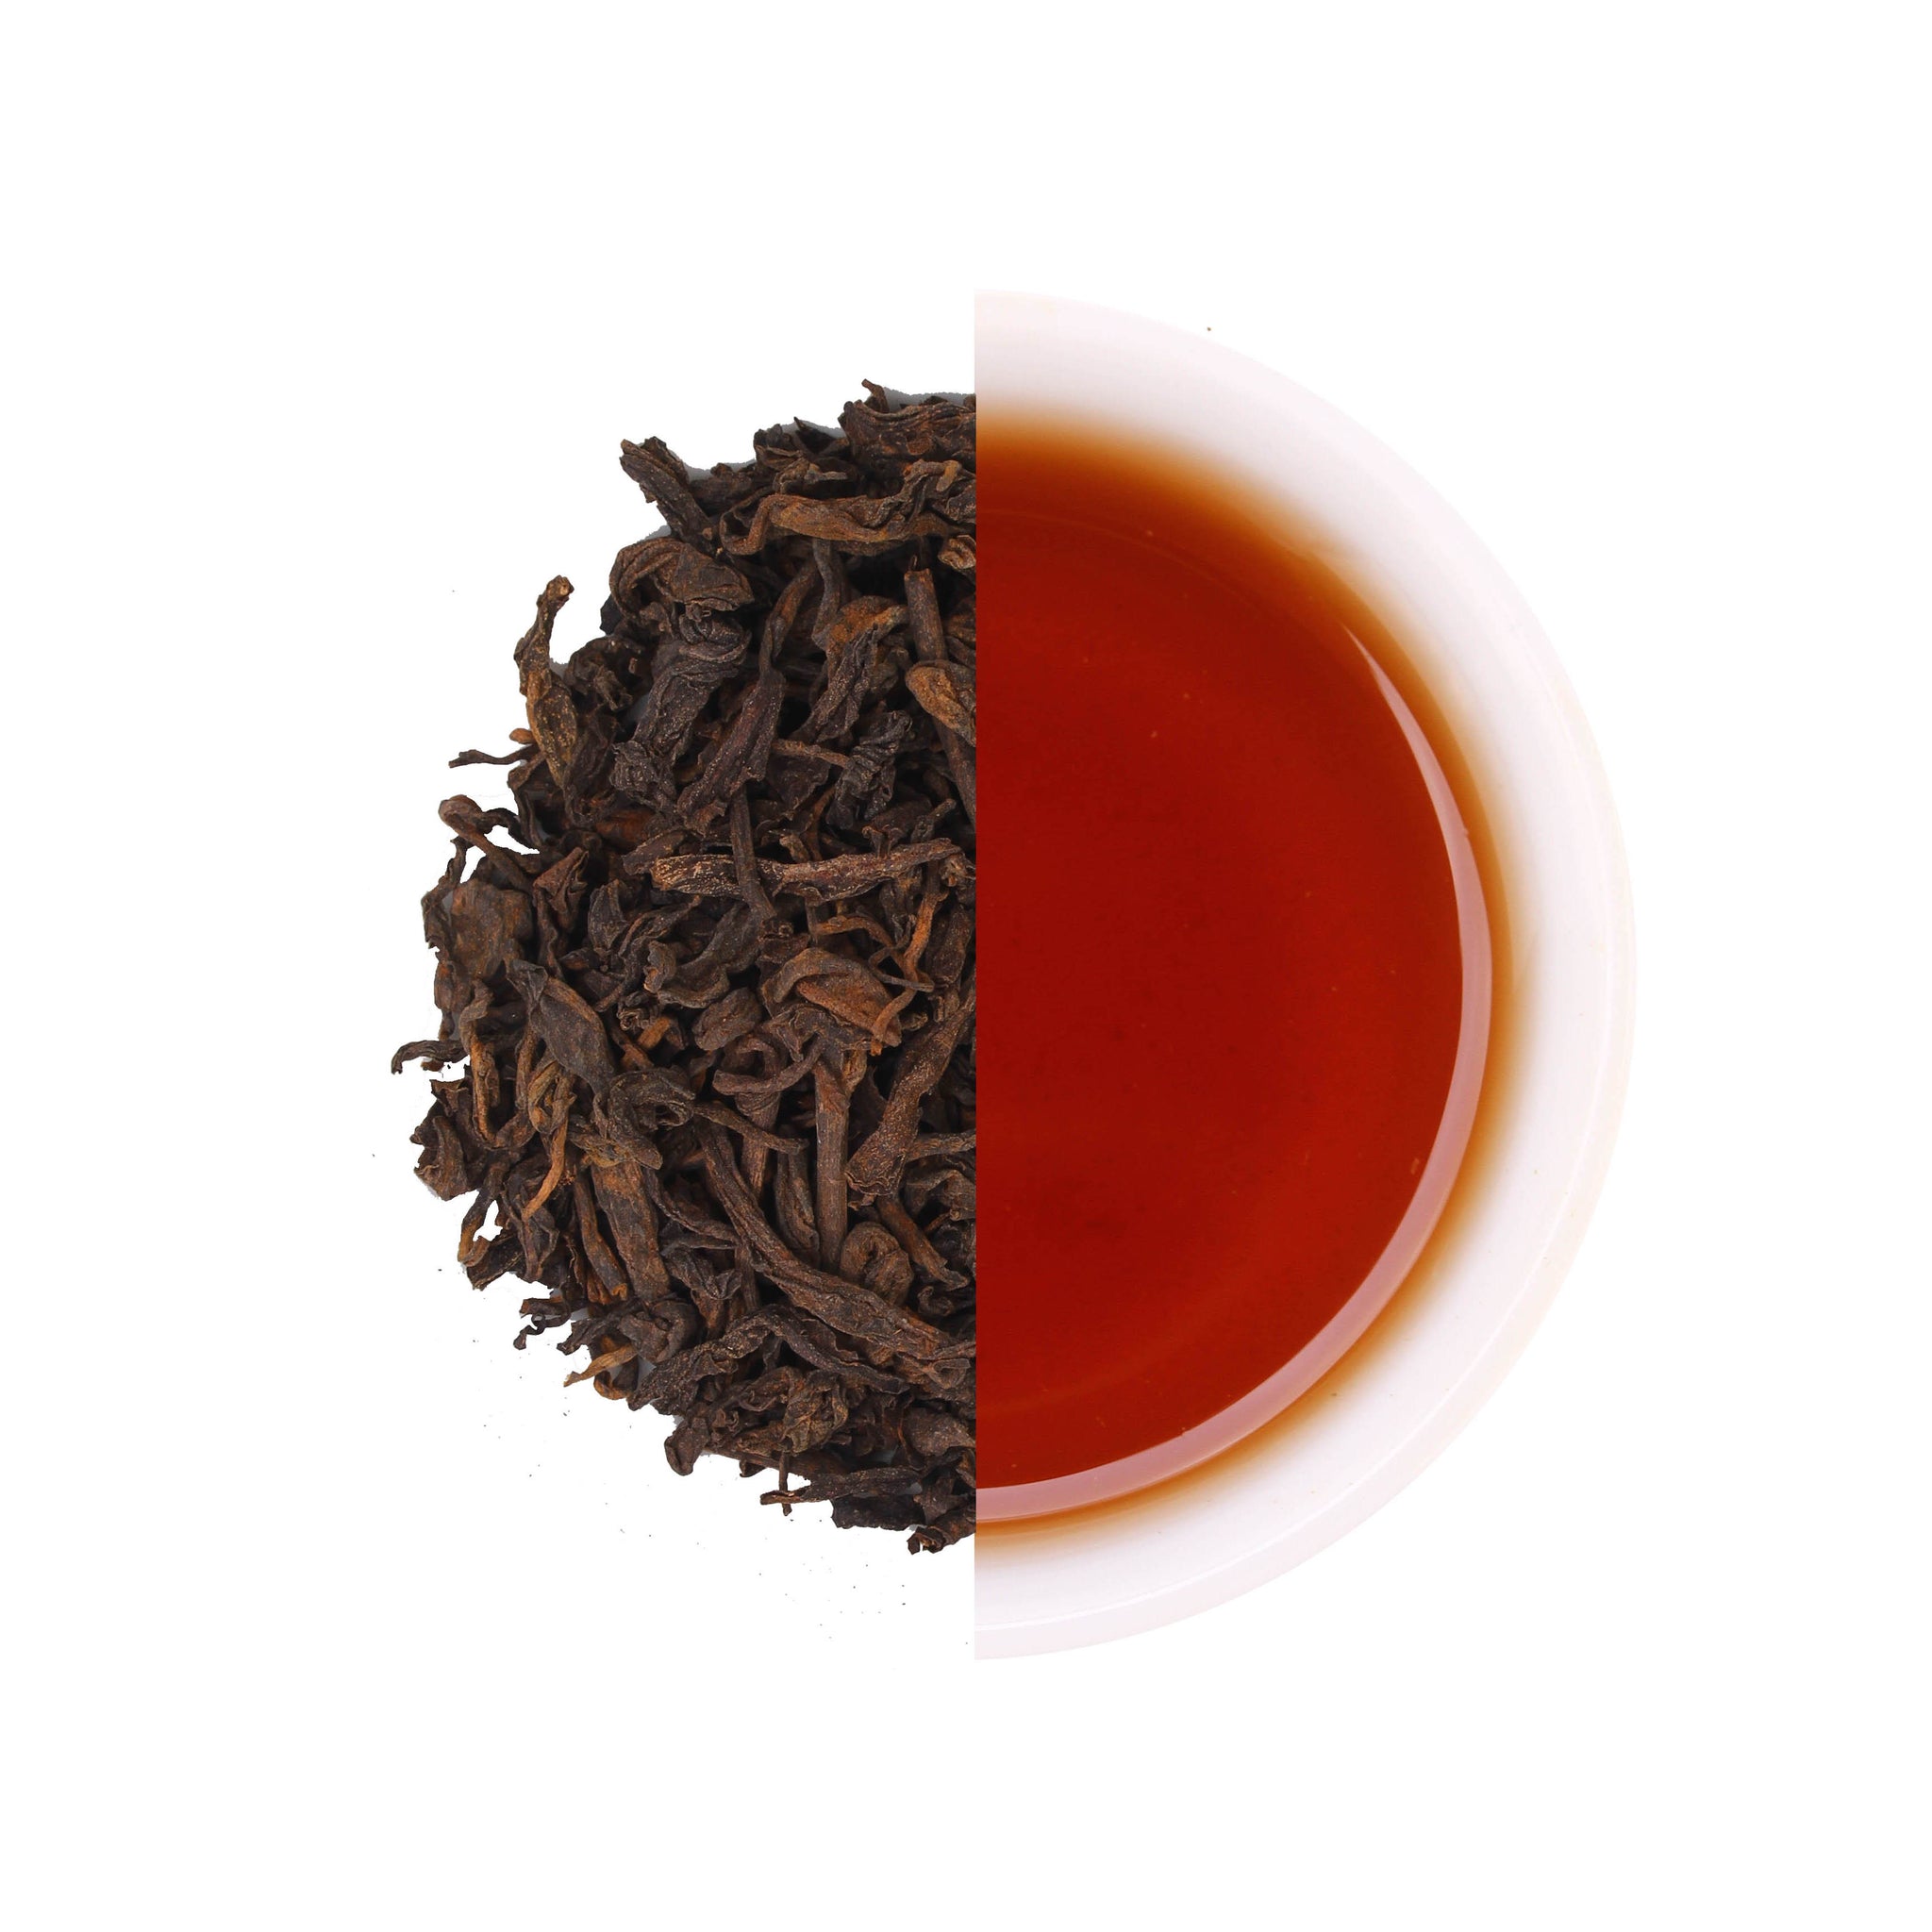 Pu'er Tea: How to Brew and Enjoy this Unique Fermented Tea